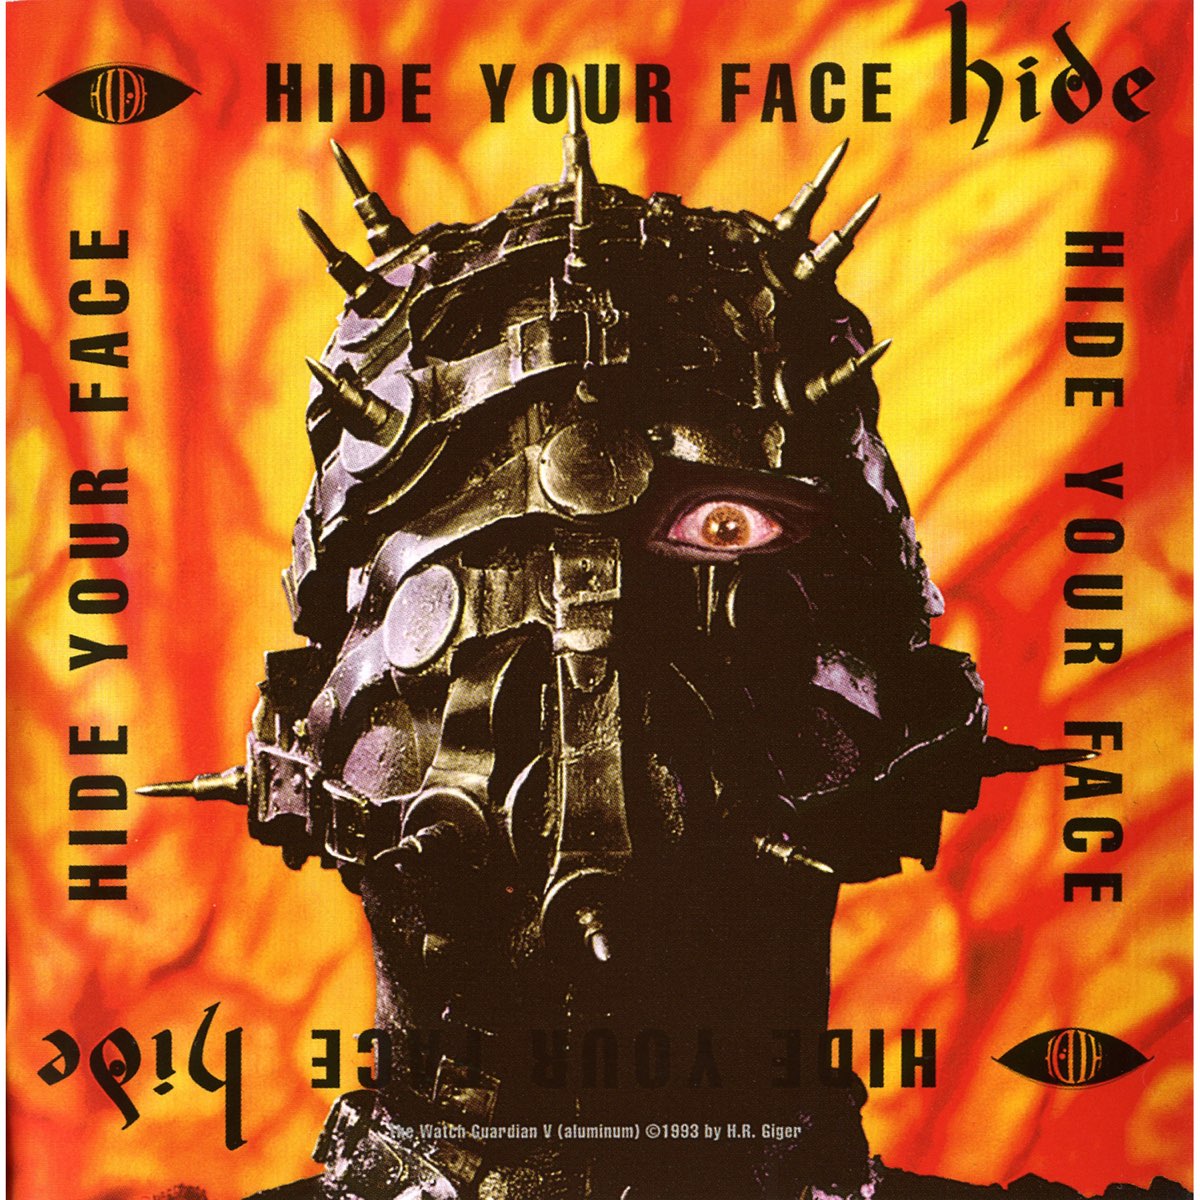 HIDE YOUR FACE - hideのアルバム - Apple Music